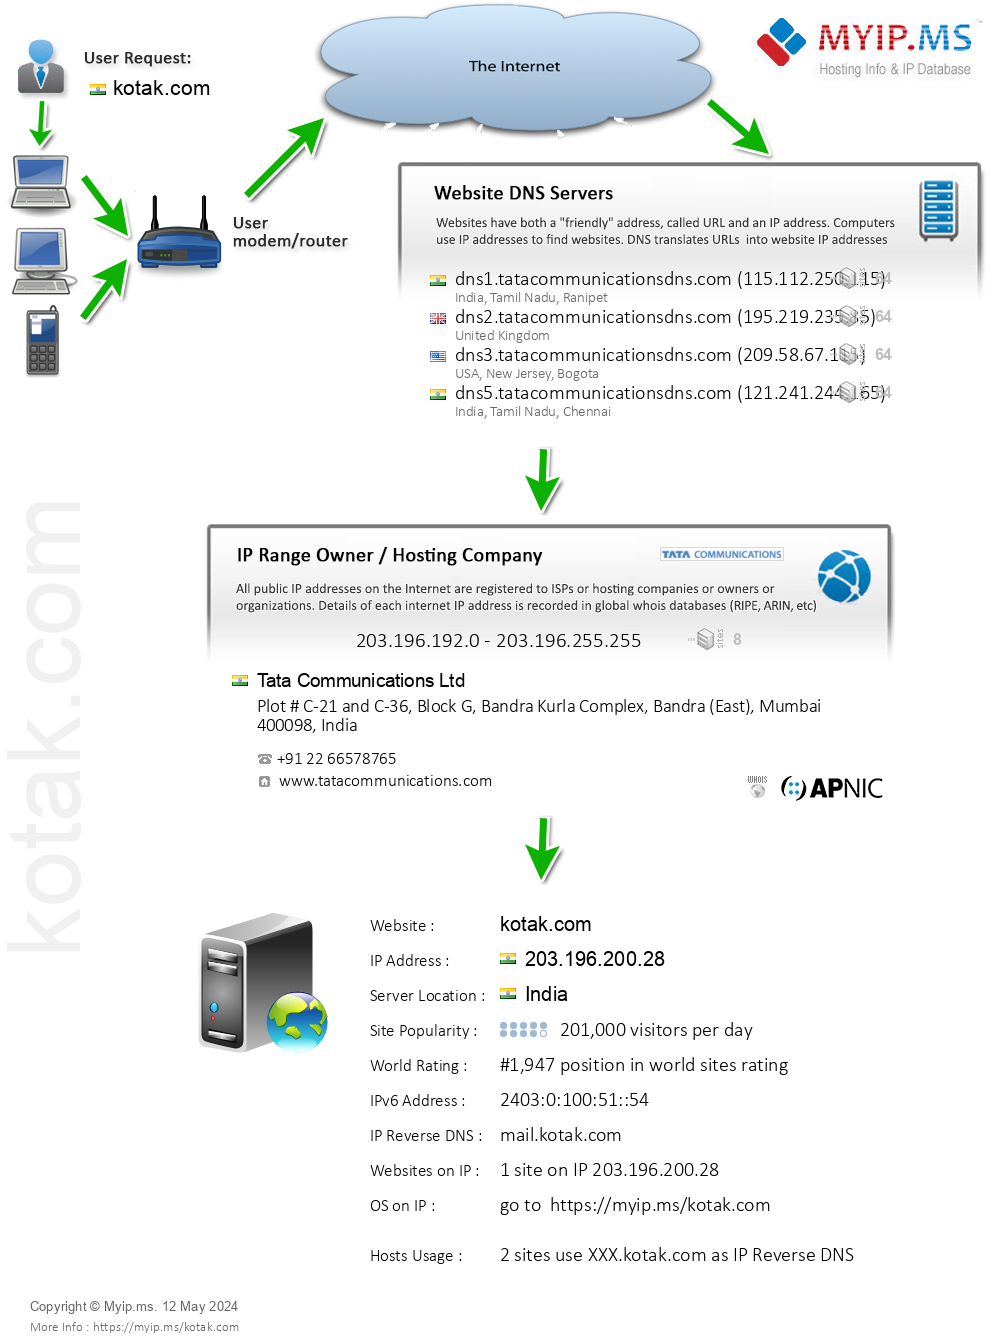 Kotak.com - Website Hosting Visual IP Diagram